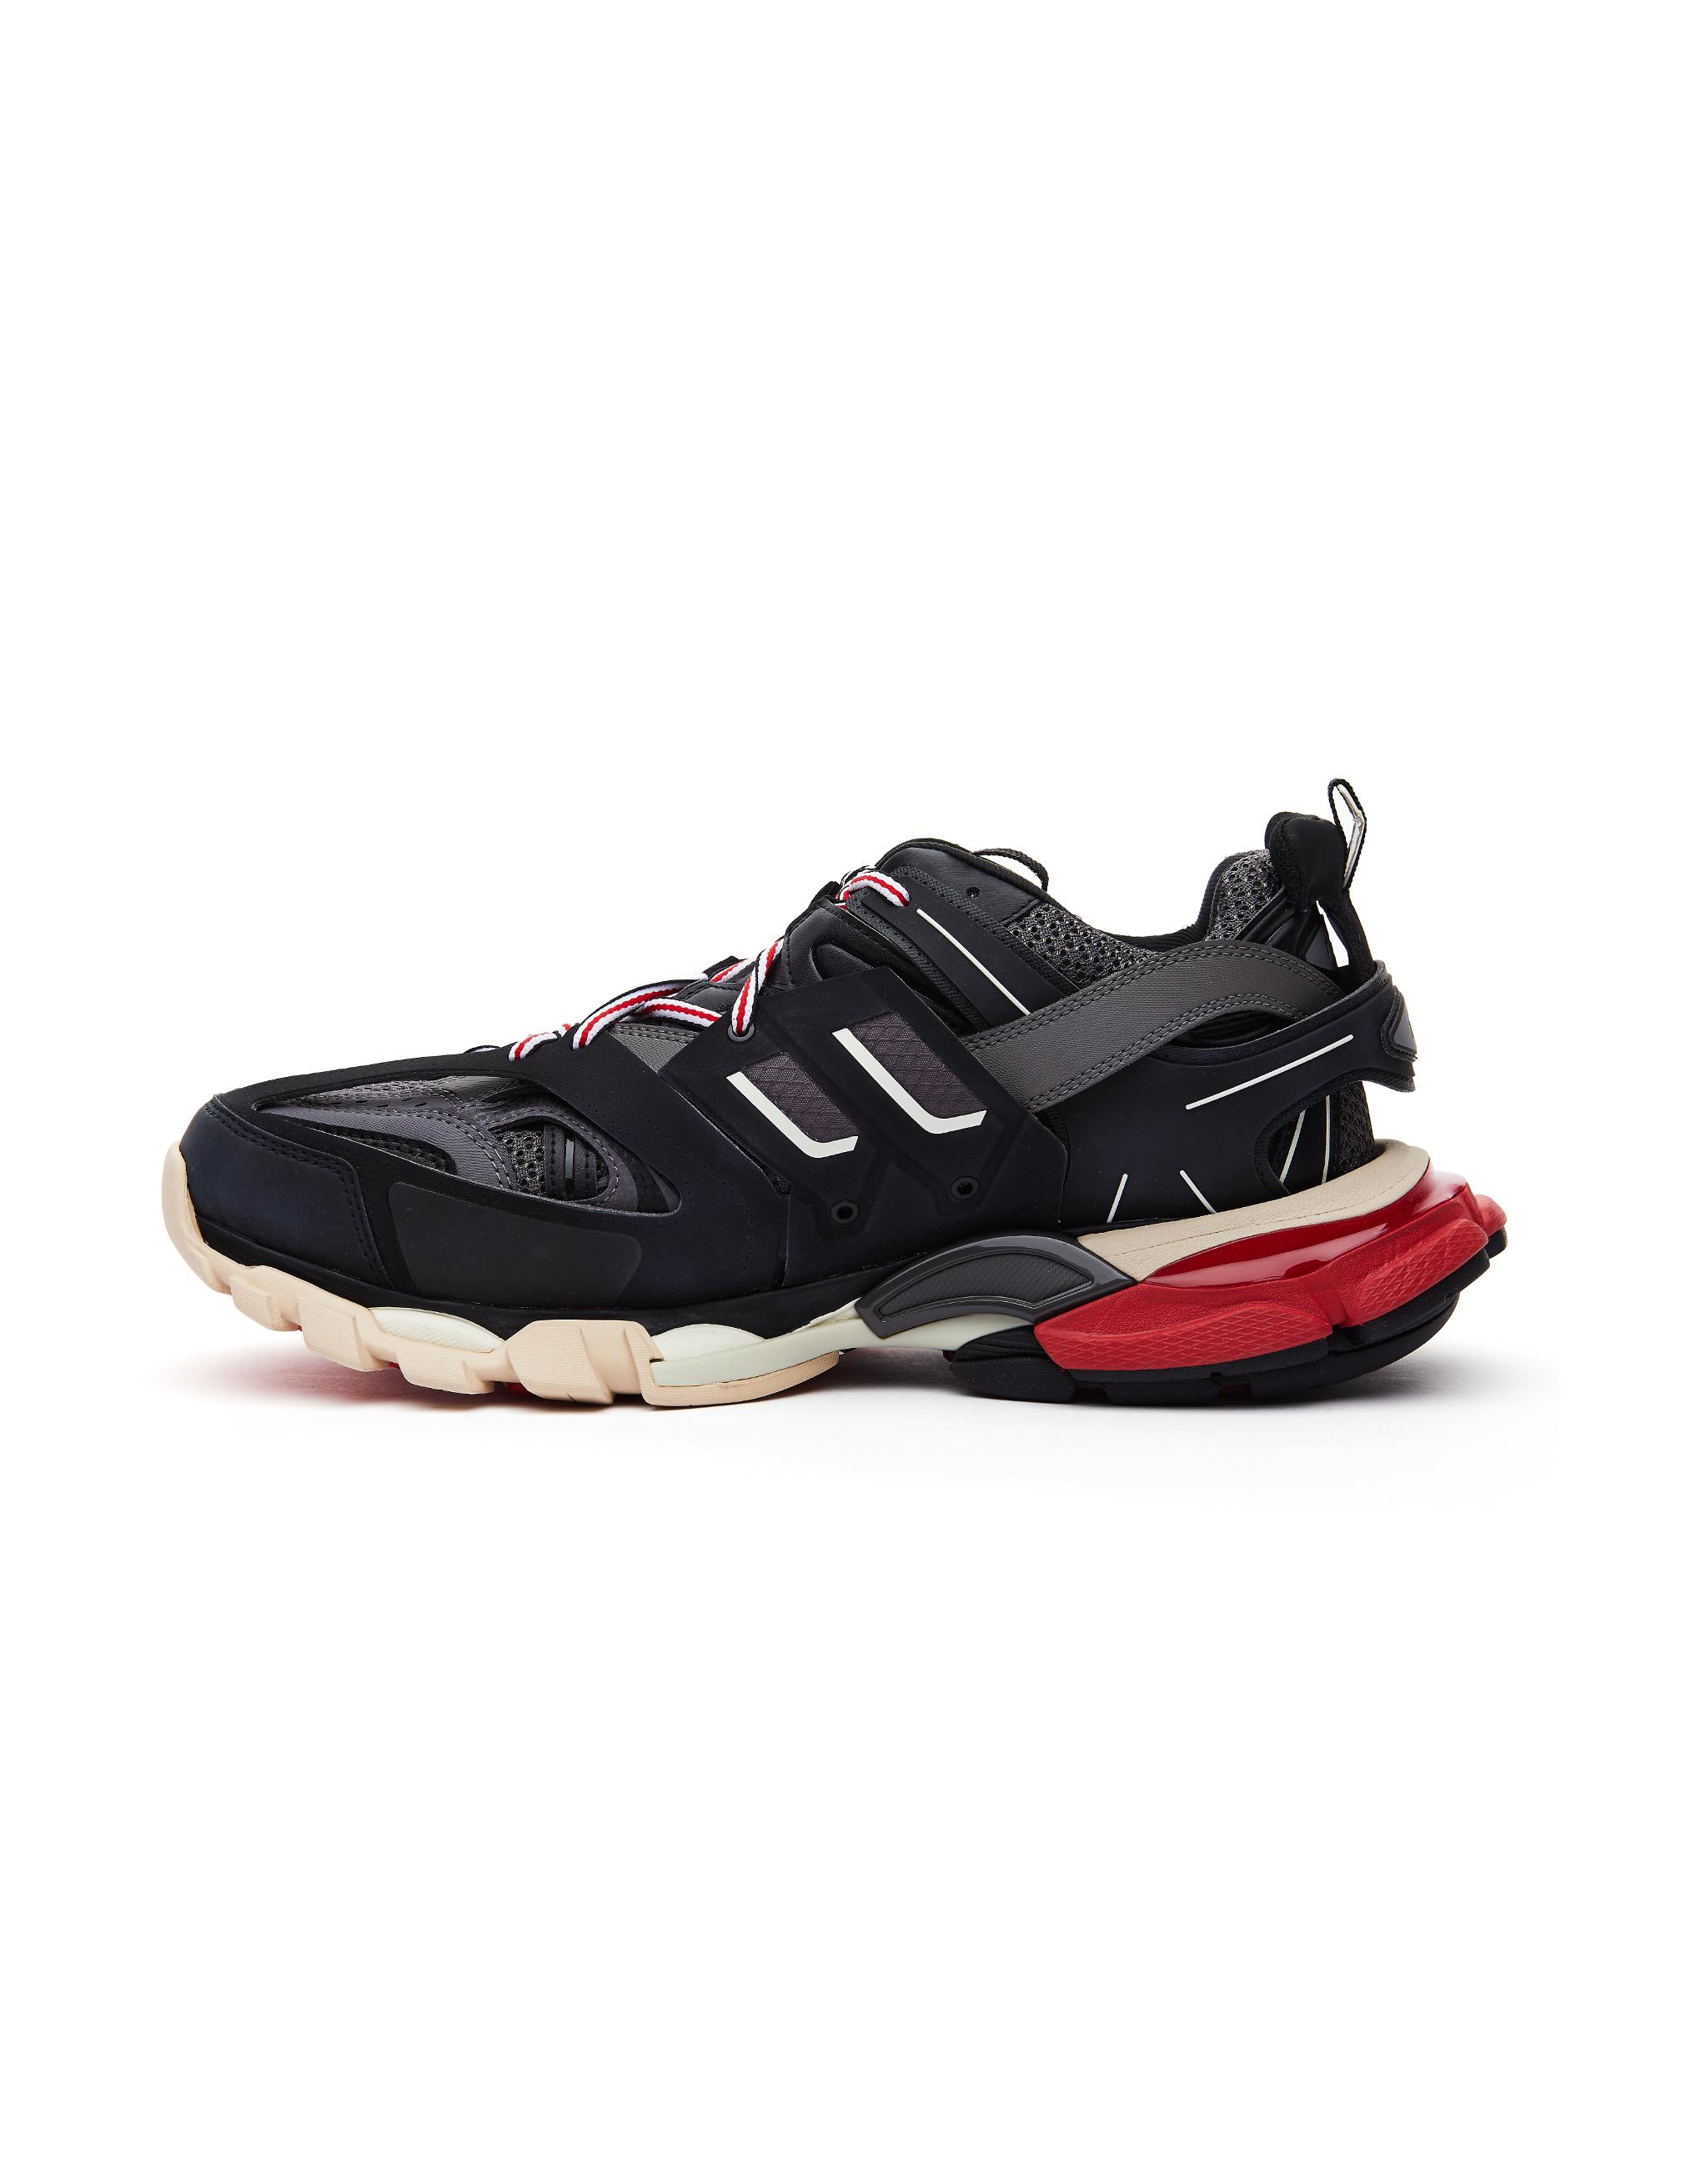 værdi tragt Vidunderlig Balenciaga Synthetic Black & Red Track Sneakers - Lyst